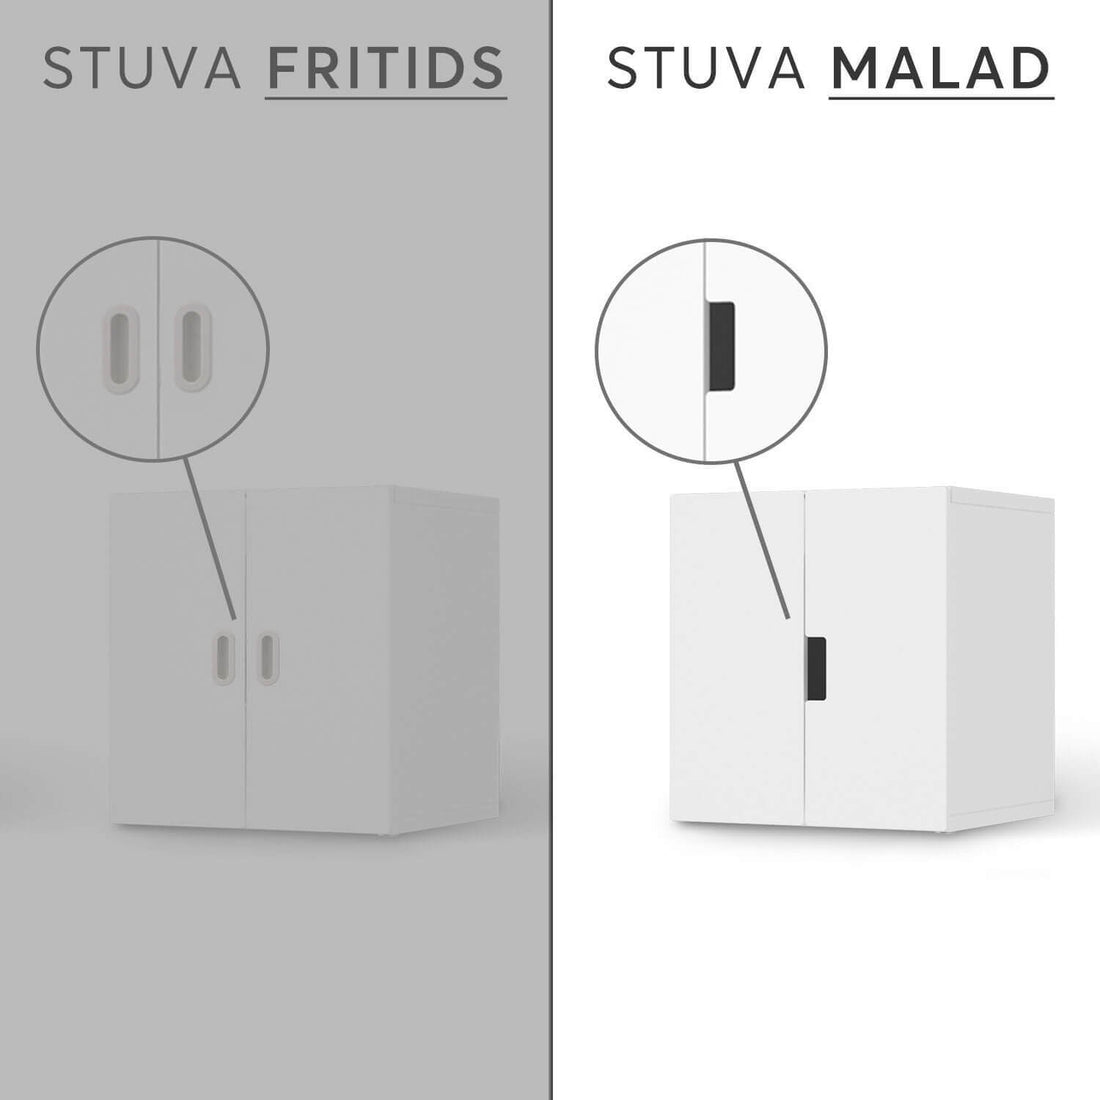 Vergleich IKEA Stuva Malad / Fritids - Origami Elephant